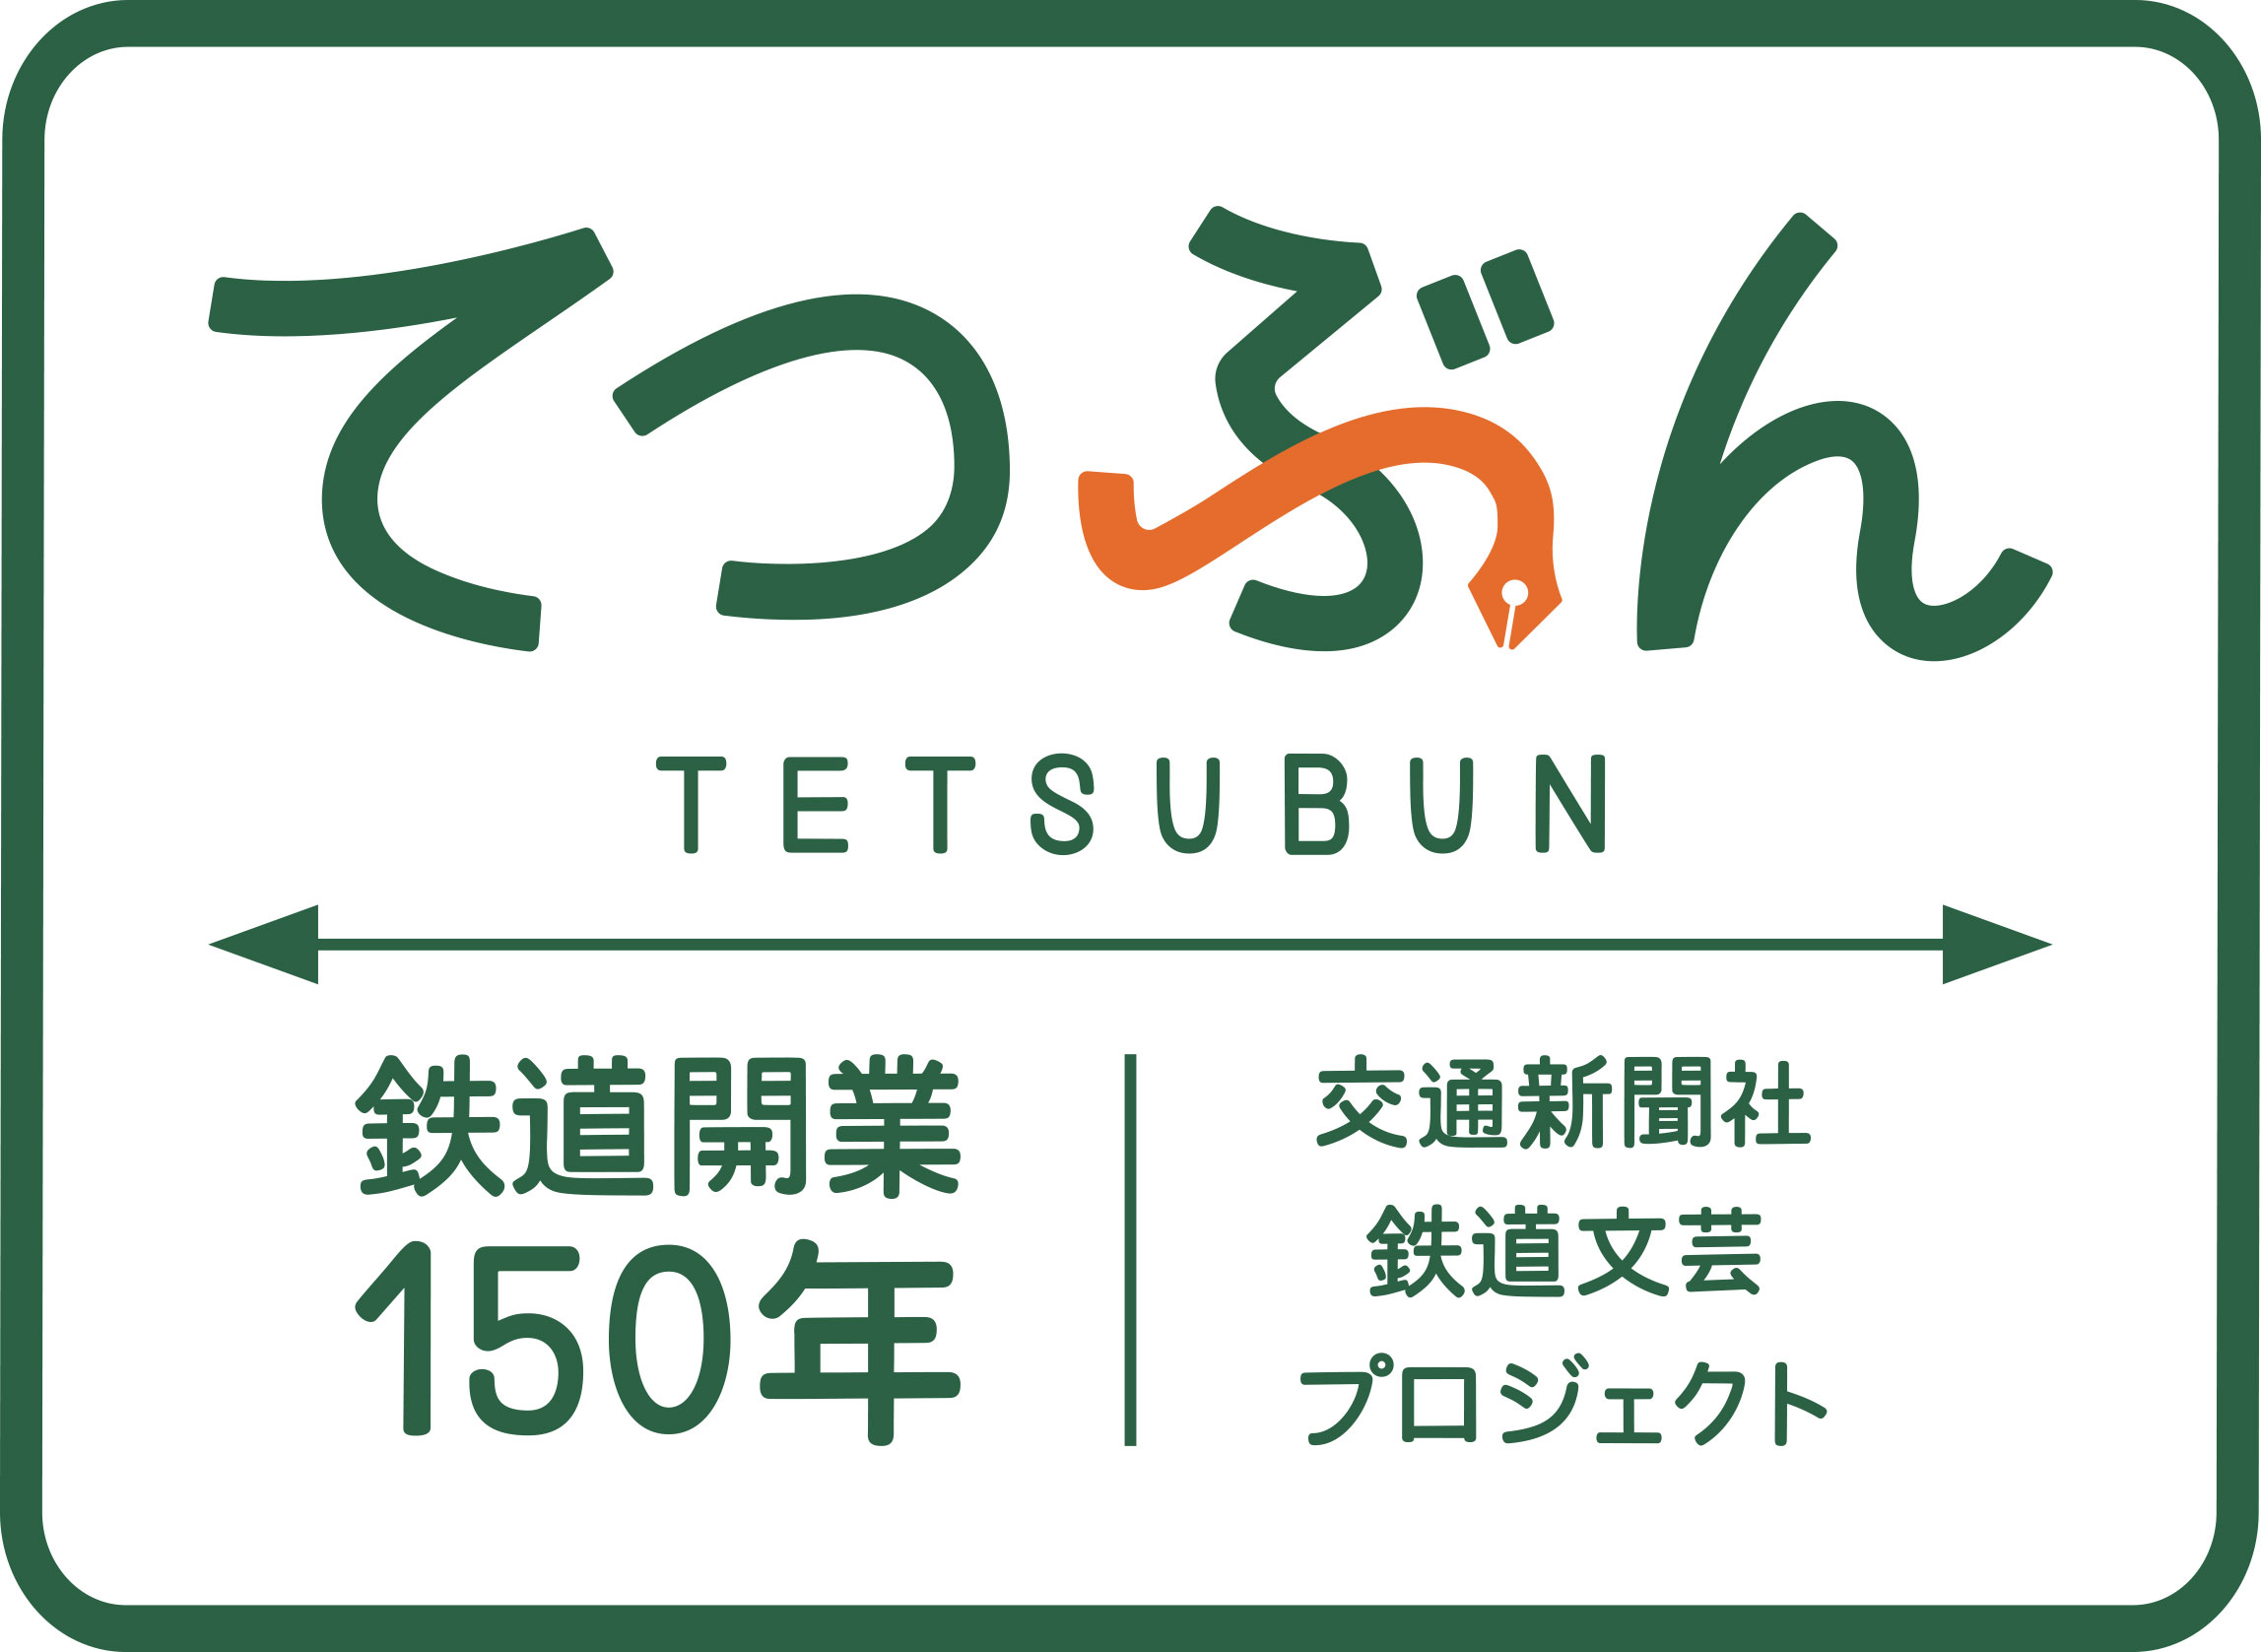 tetsubun_logo_220307-8.jpg